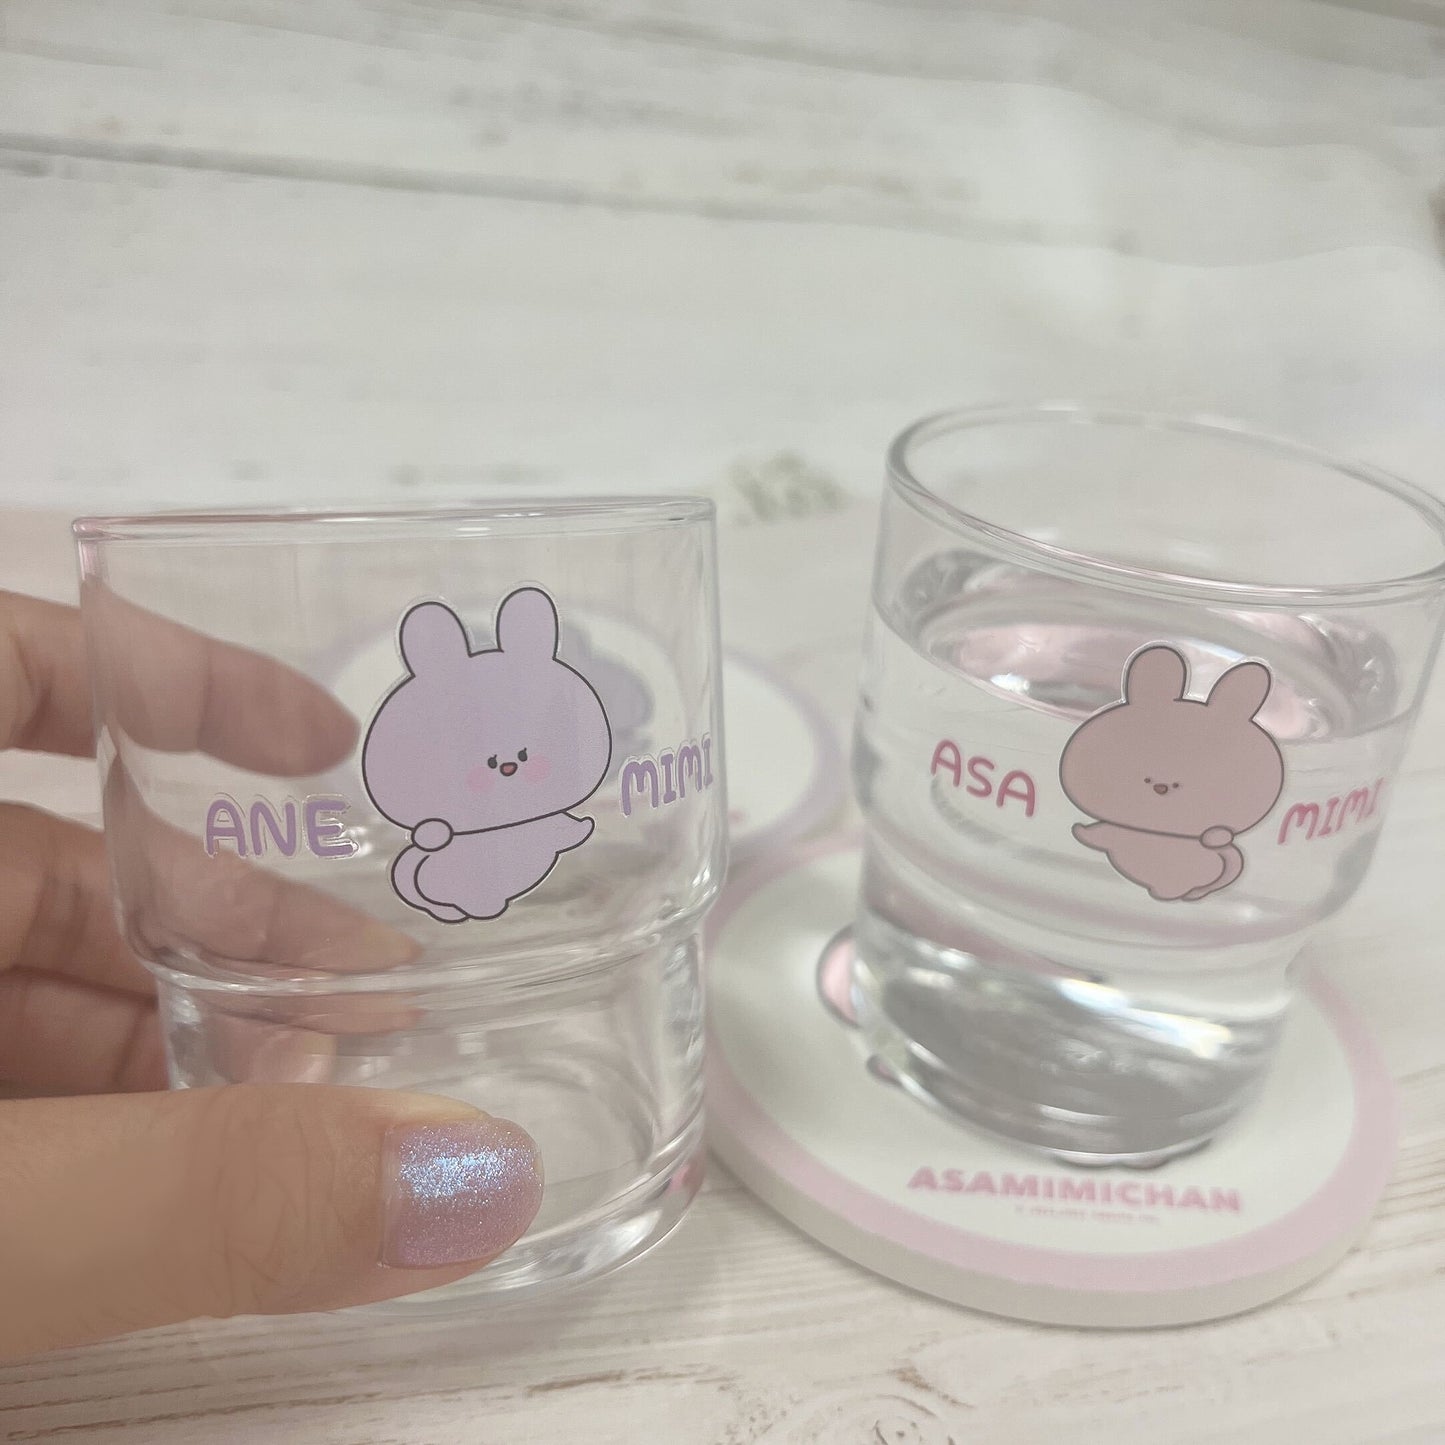 [Asamimi-chan] Water glass (Asamimi BASIC May) [Shipped in mid-July]